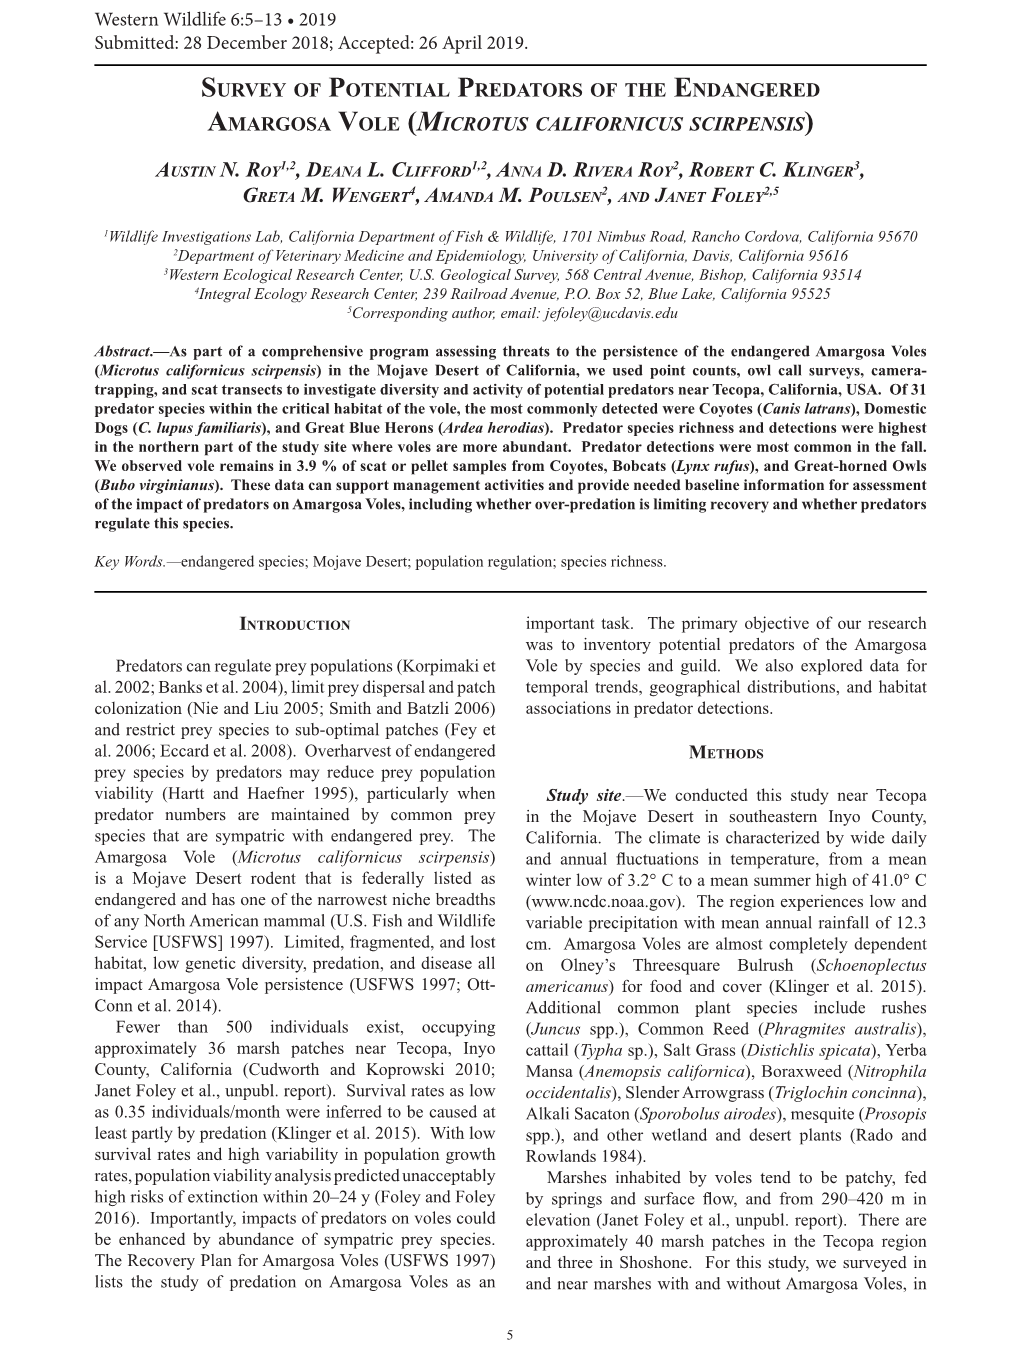 Survey of Potential Predators of the Endangered Amargosa Vole (Microtus Californicus Scirpensis)